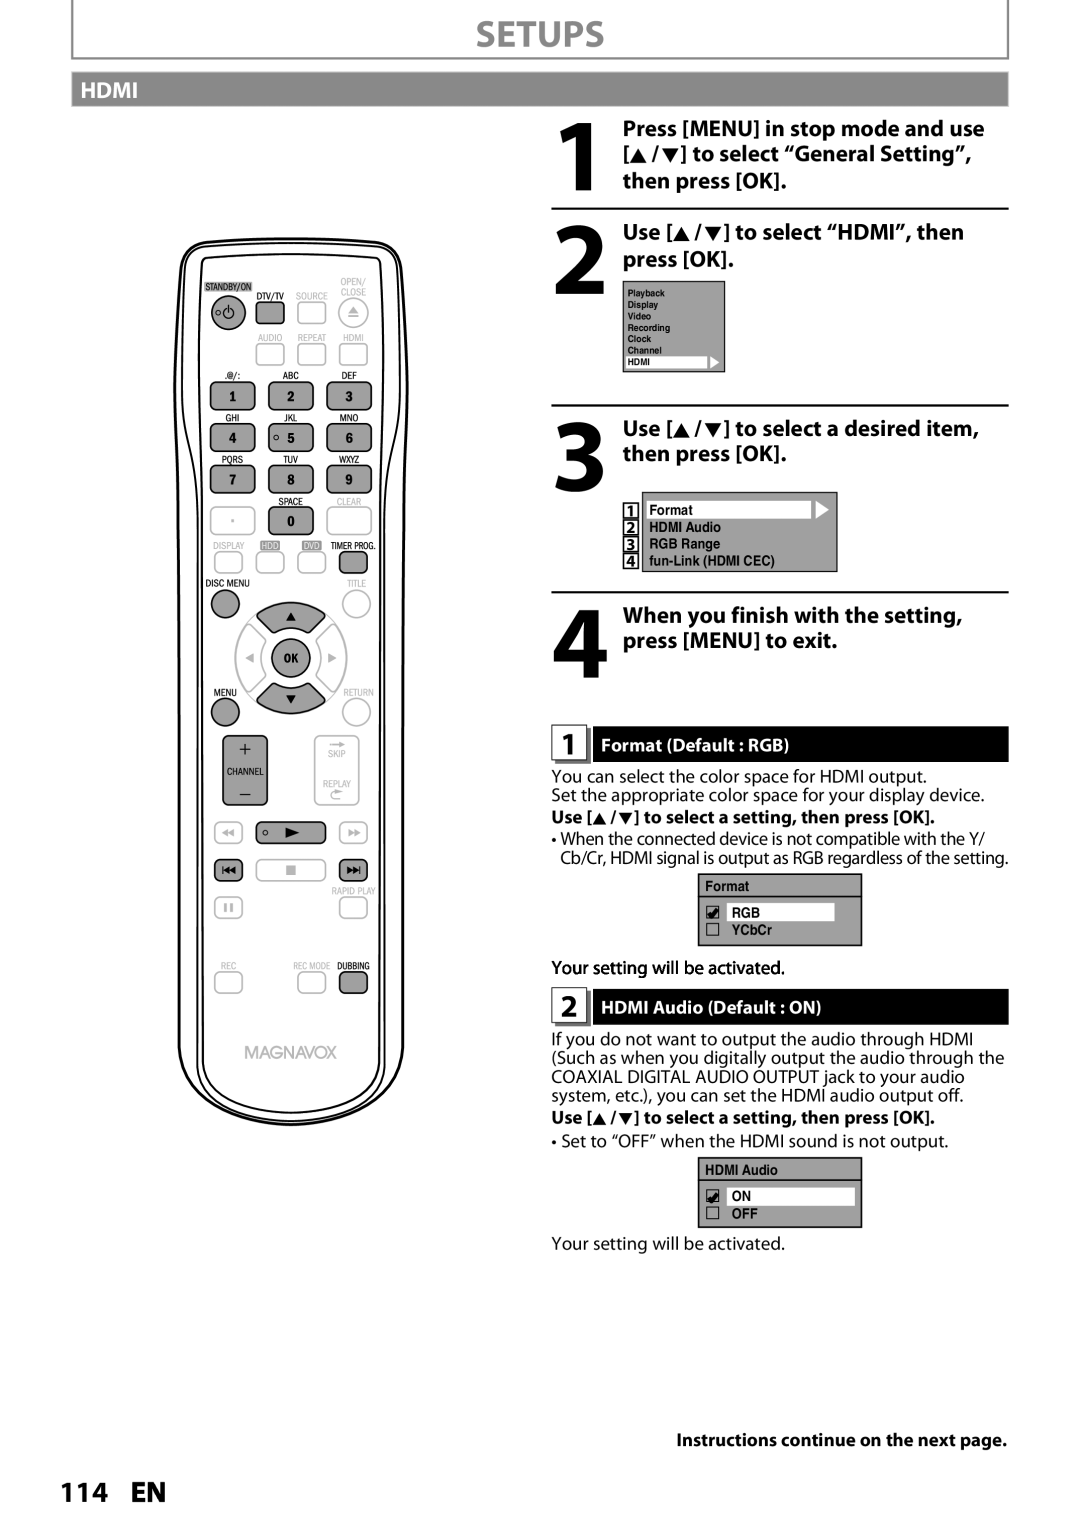 Magnavox MDR533H 114 EN, Hdmi, K / L to select “General Setting”, Use K / L to select “HDMI”, then, Setups, then press OK 